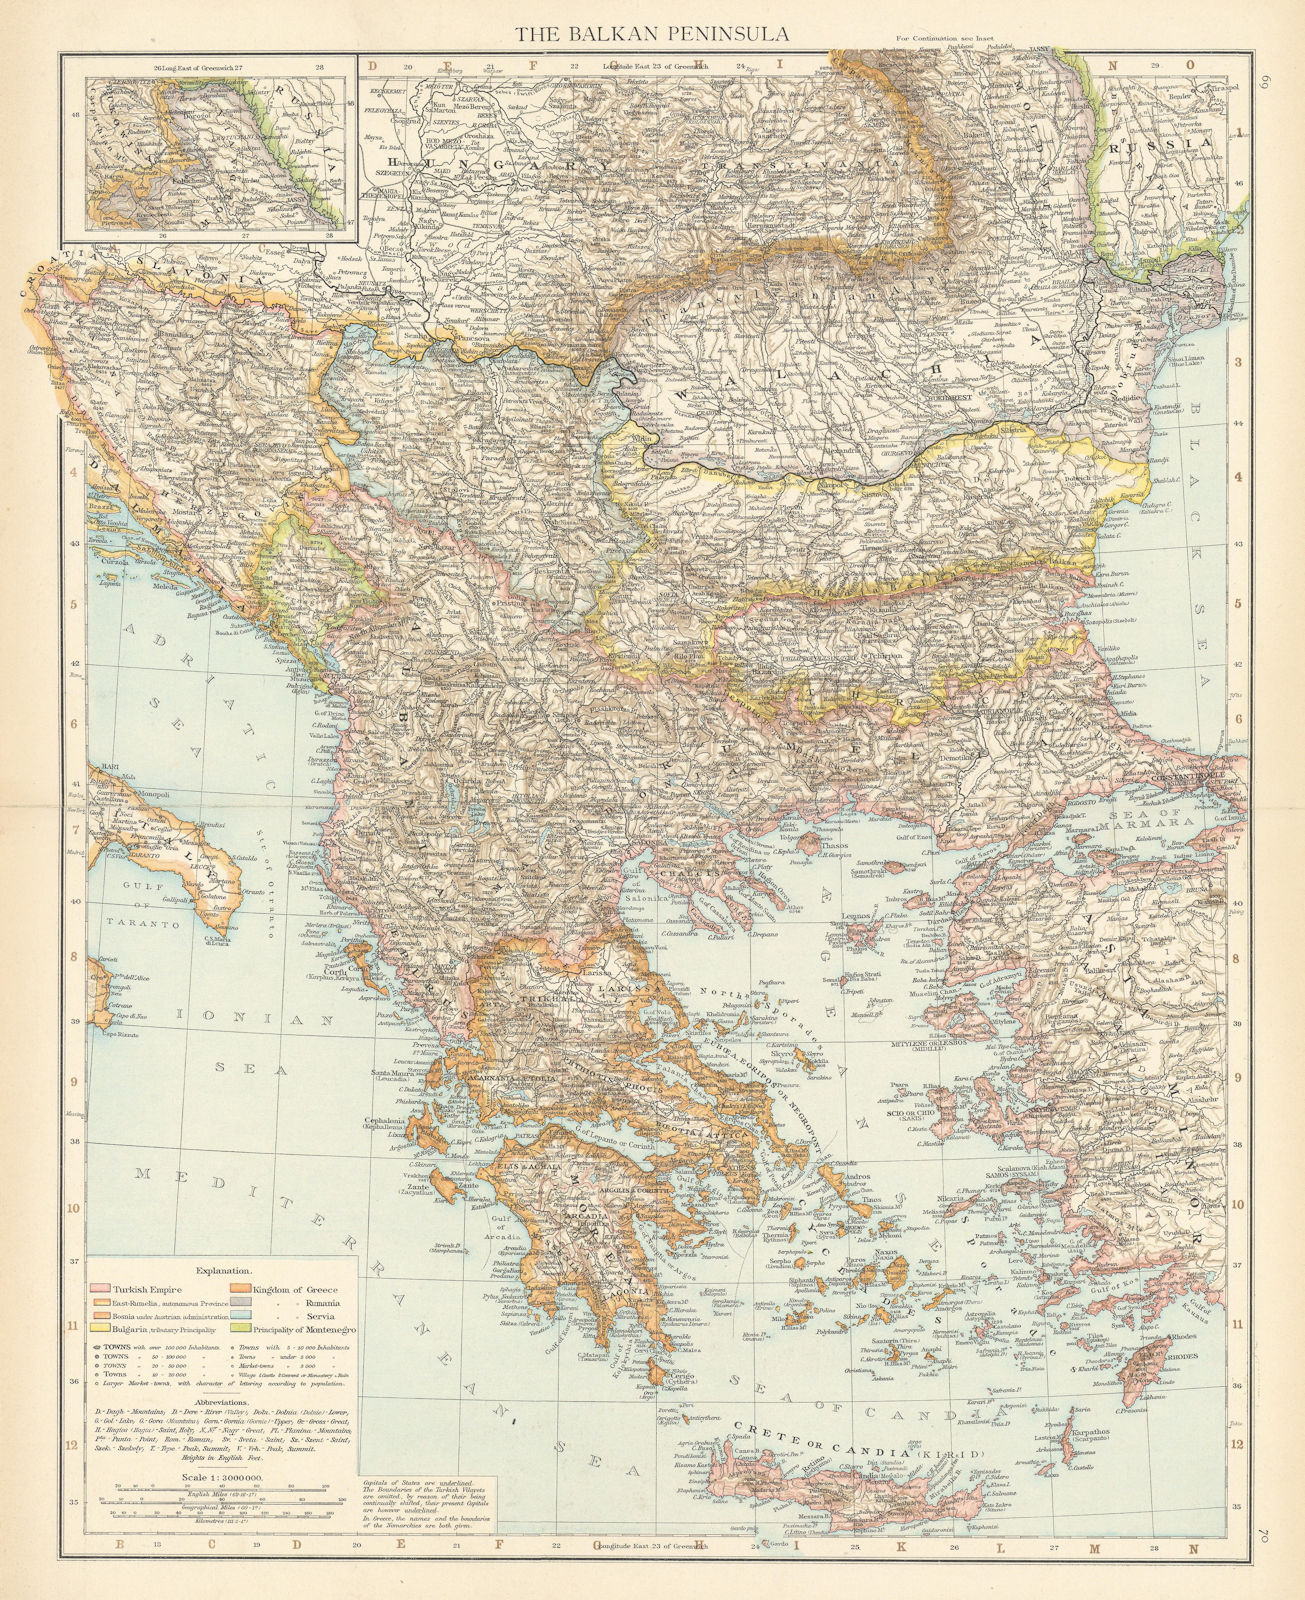 Balkan Peninsula. Turkish Empire. East Rumelia Greece Servia. THE TIMES 1895 map